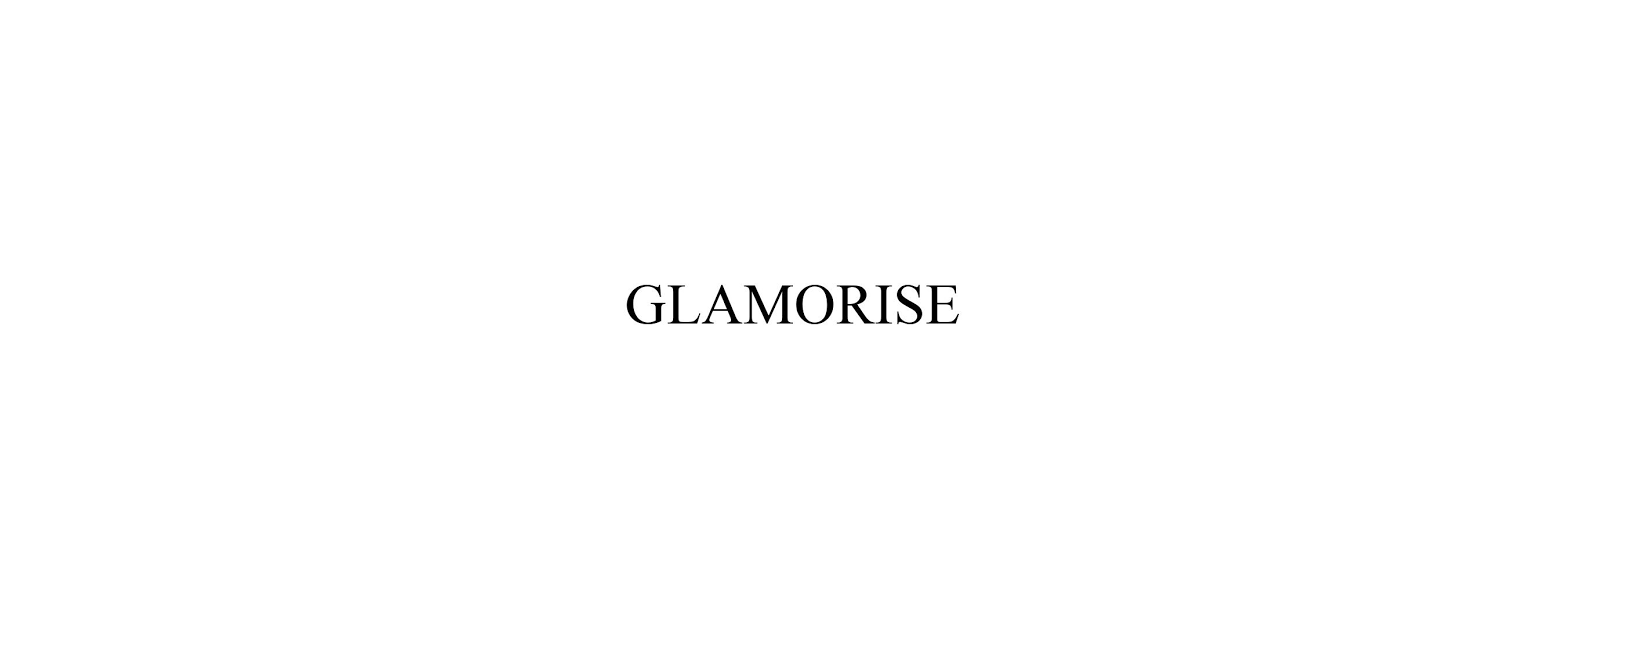 Glamorise Glamour: Redefining Beauty Standards